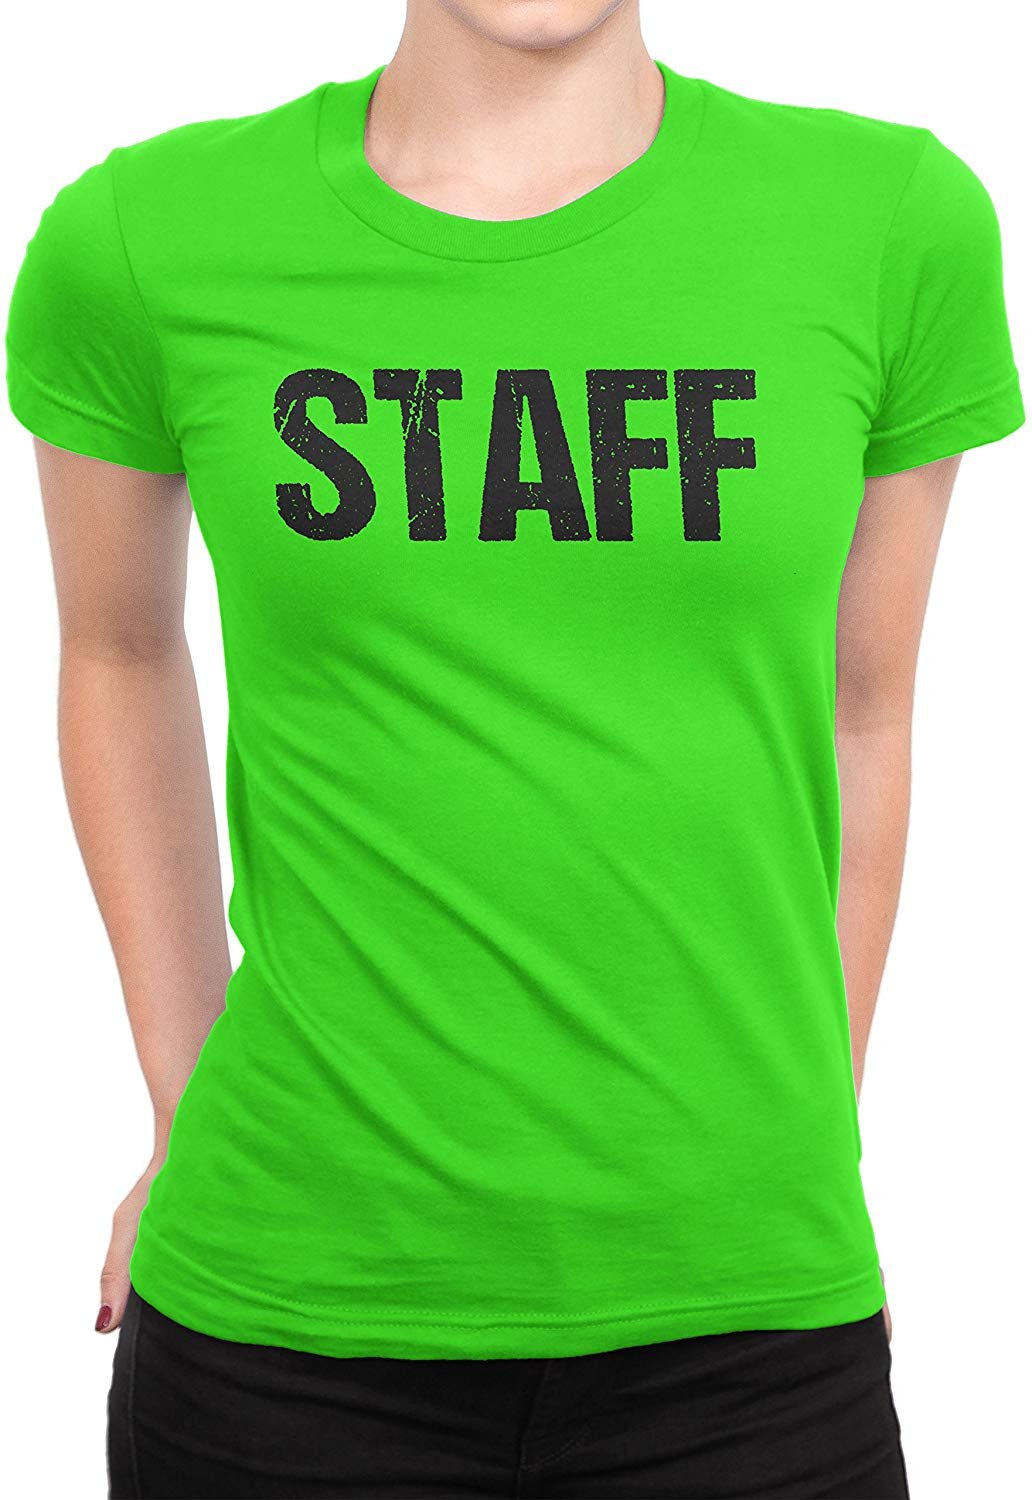 Staff Ladies Short Sleeve T-Shirt (Distressed Design, Neon Green)